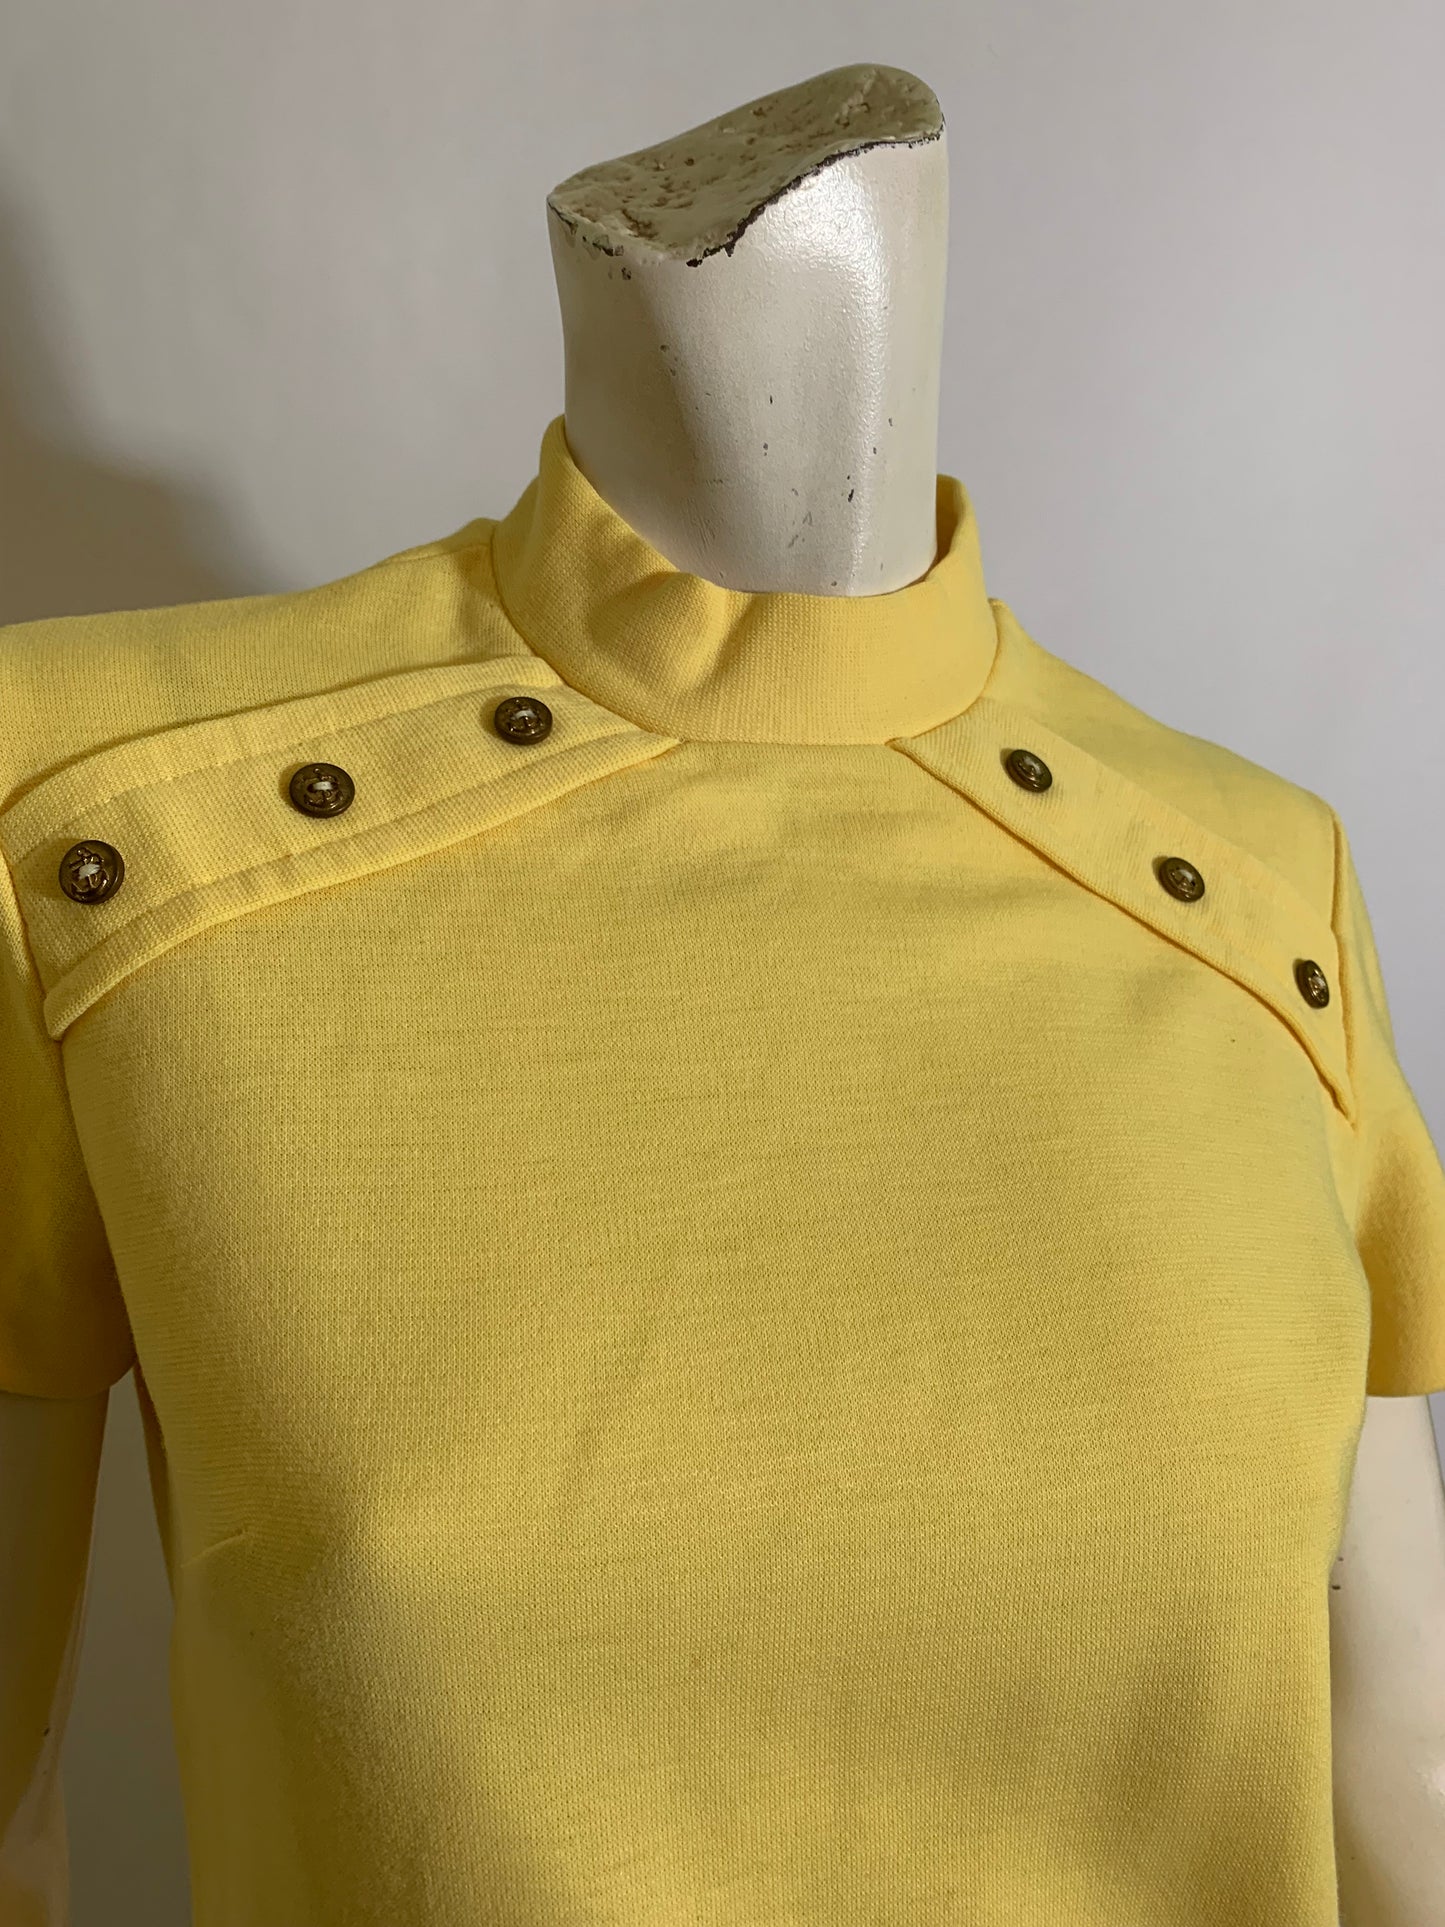 Nautical Themed Lemon Yellow Tunic Micro Mini Dress circa 1970s